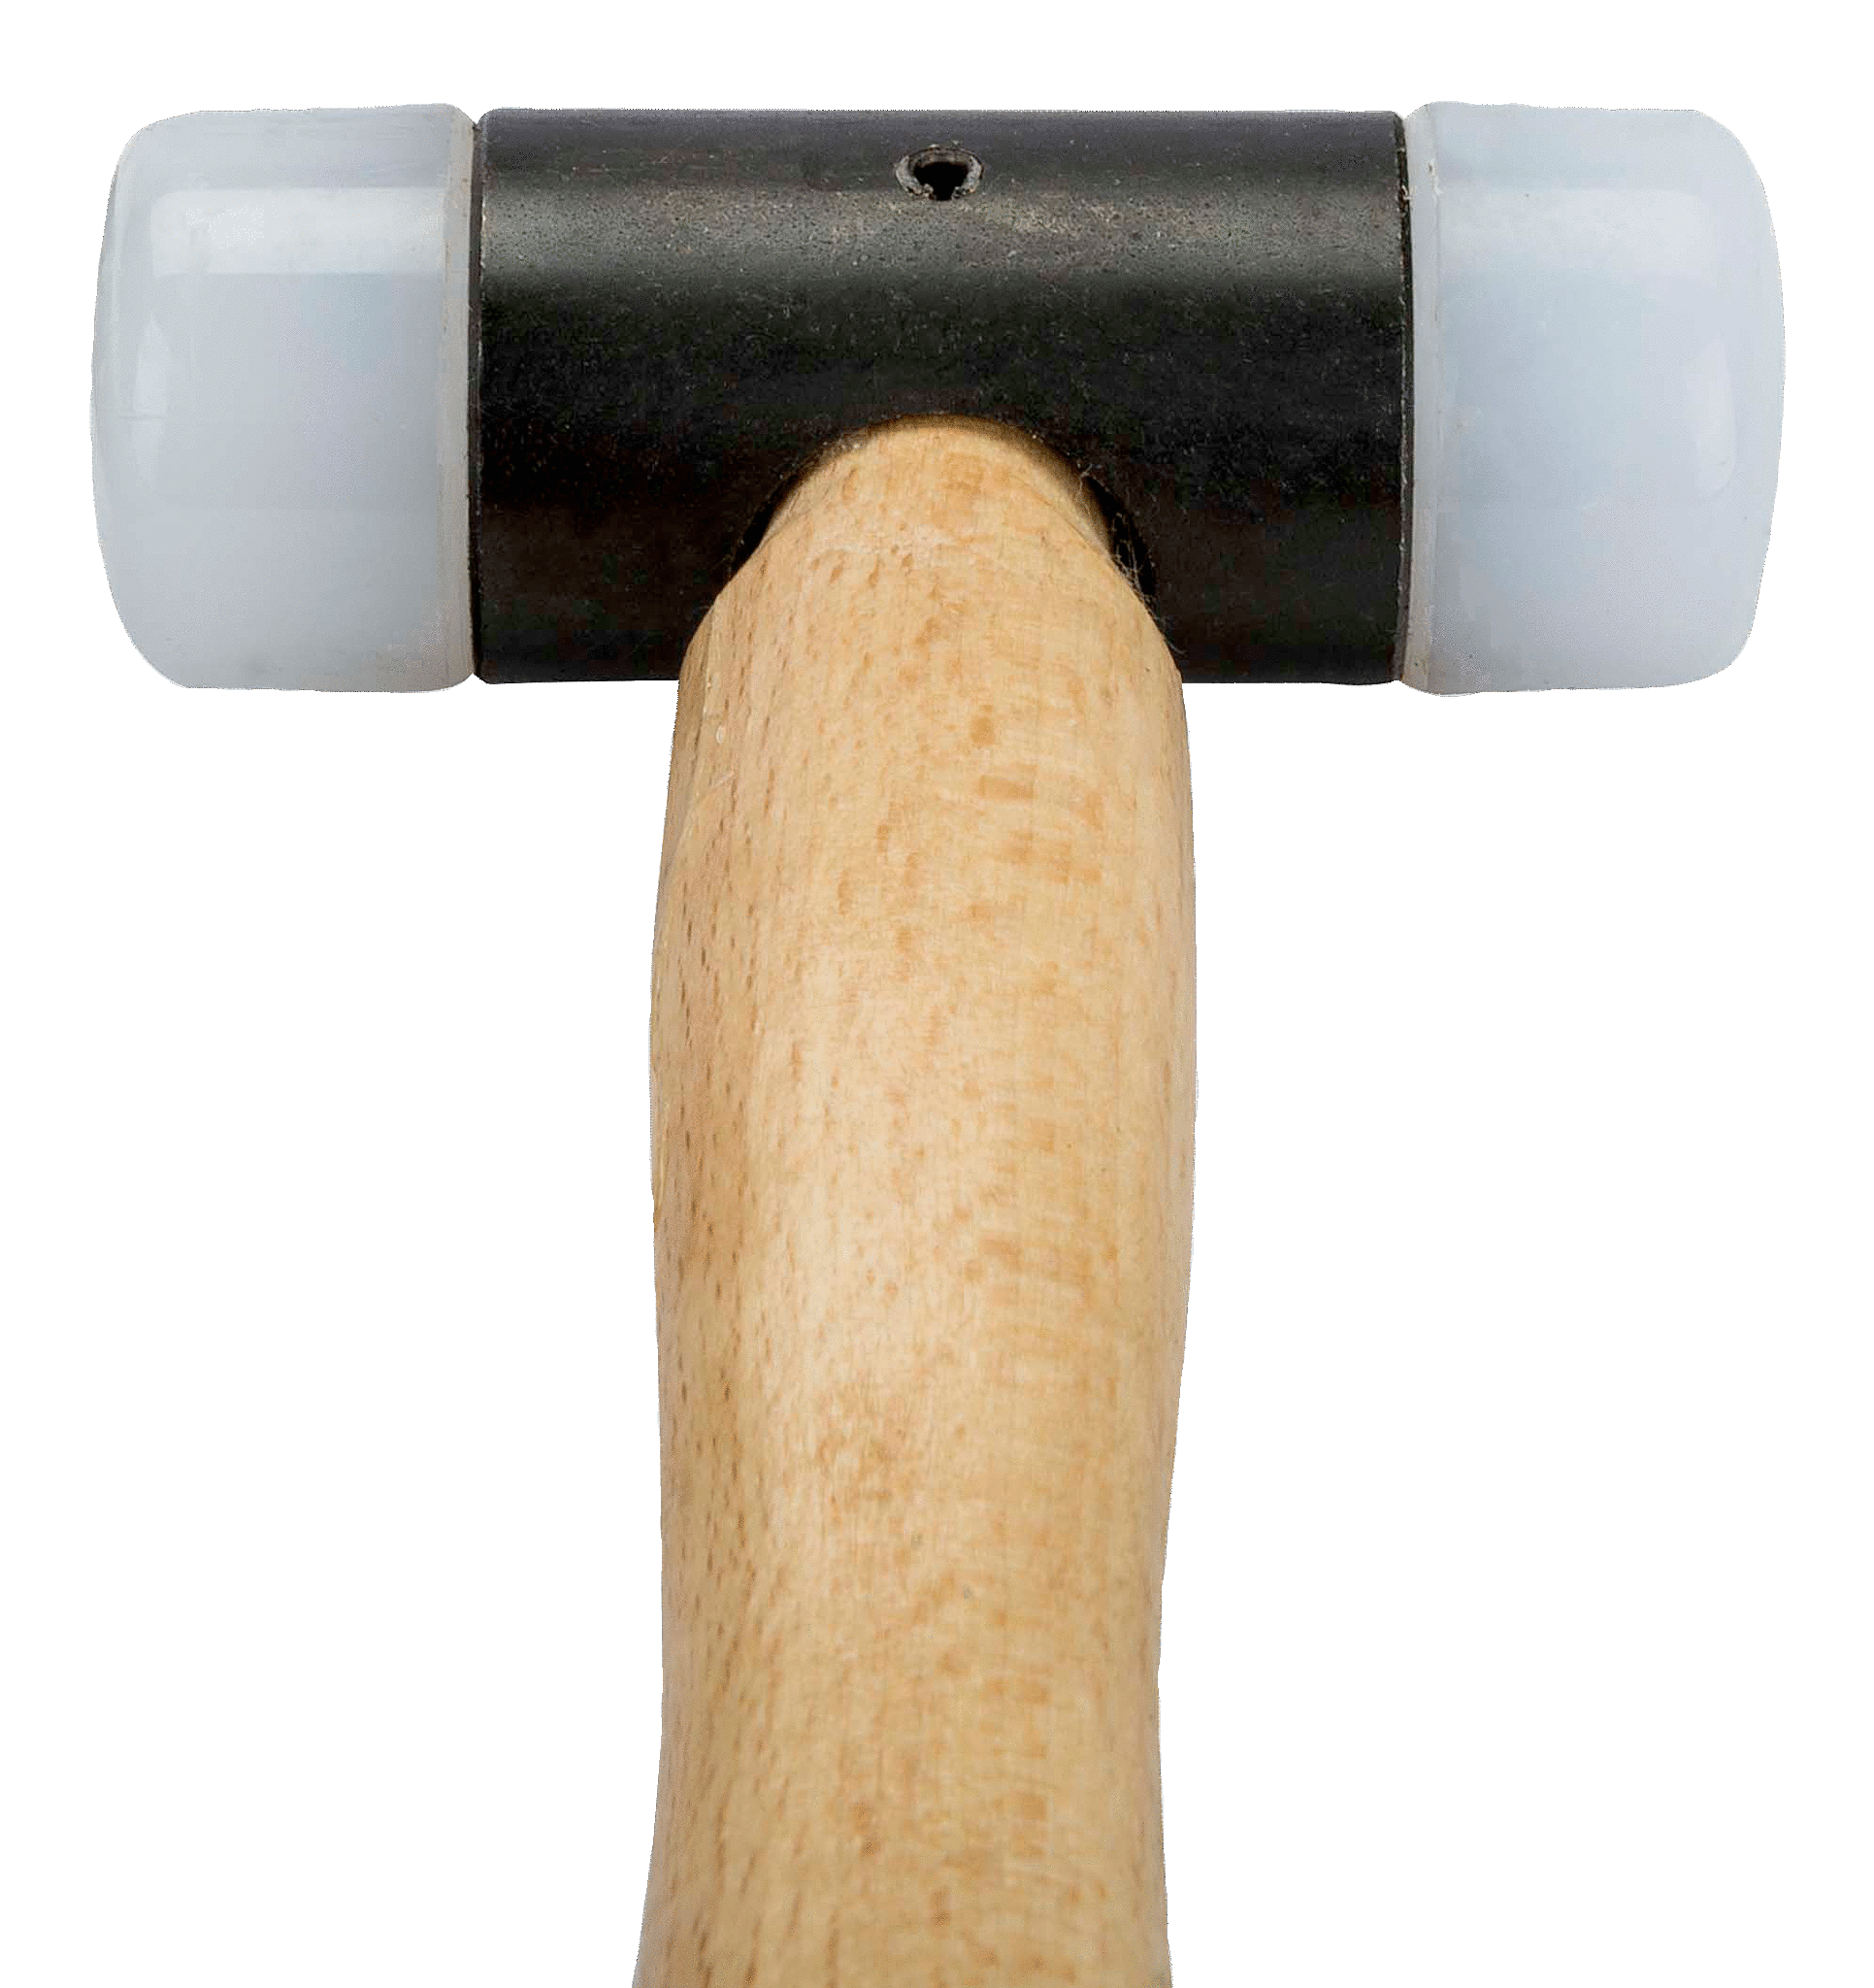 картинка Молоток с нейлоновыми бойками, деревянная рукоятка BAHCO 3625W от магазина "Элит-инструмент"